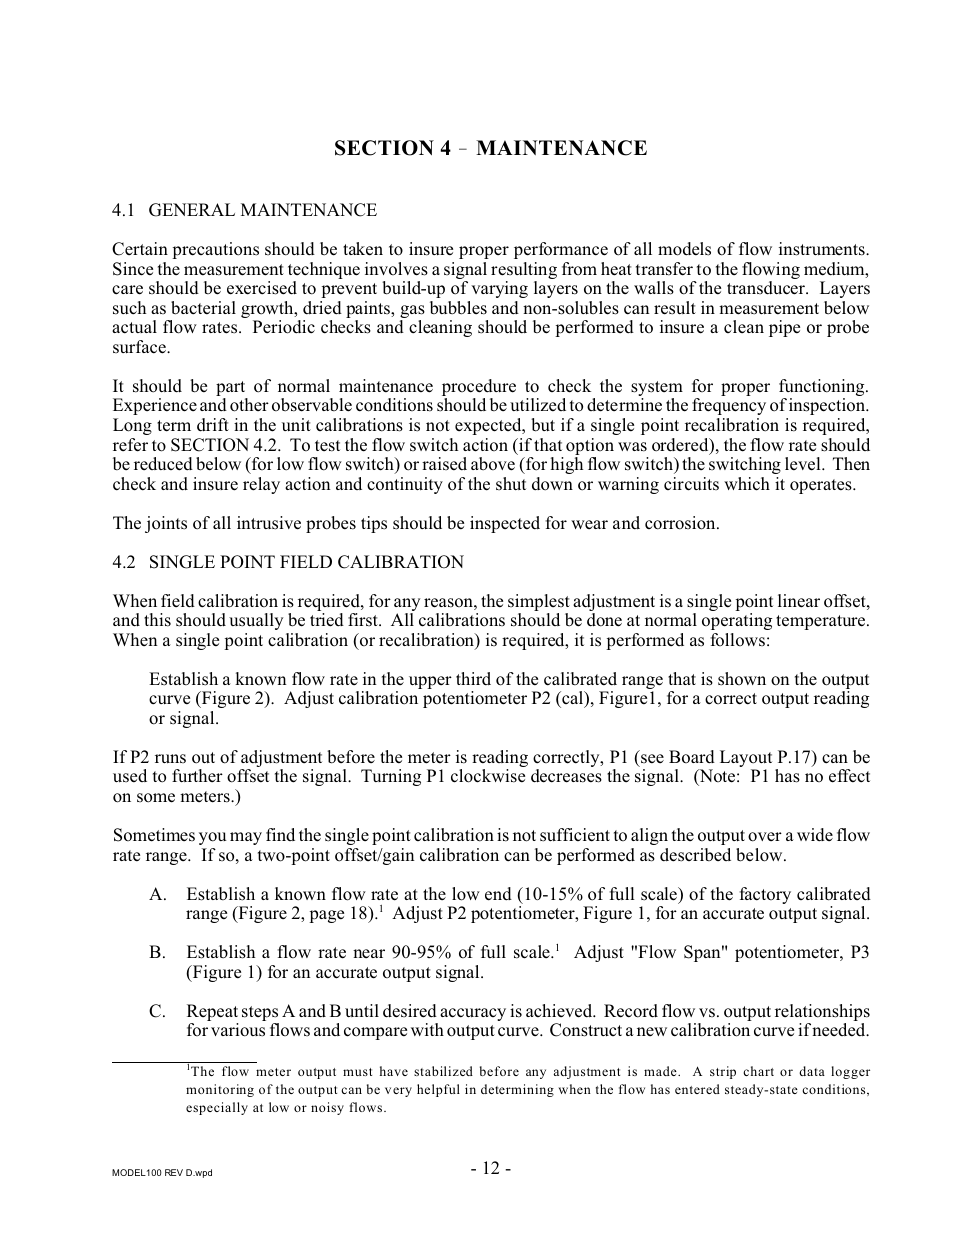 Maintenance | Intek 100 User Manual | Page 14 / 20